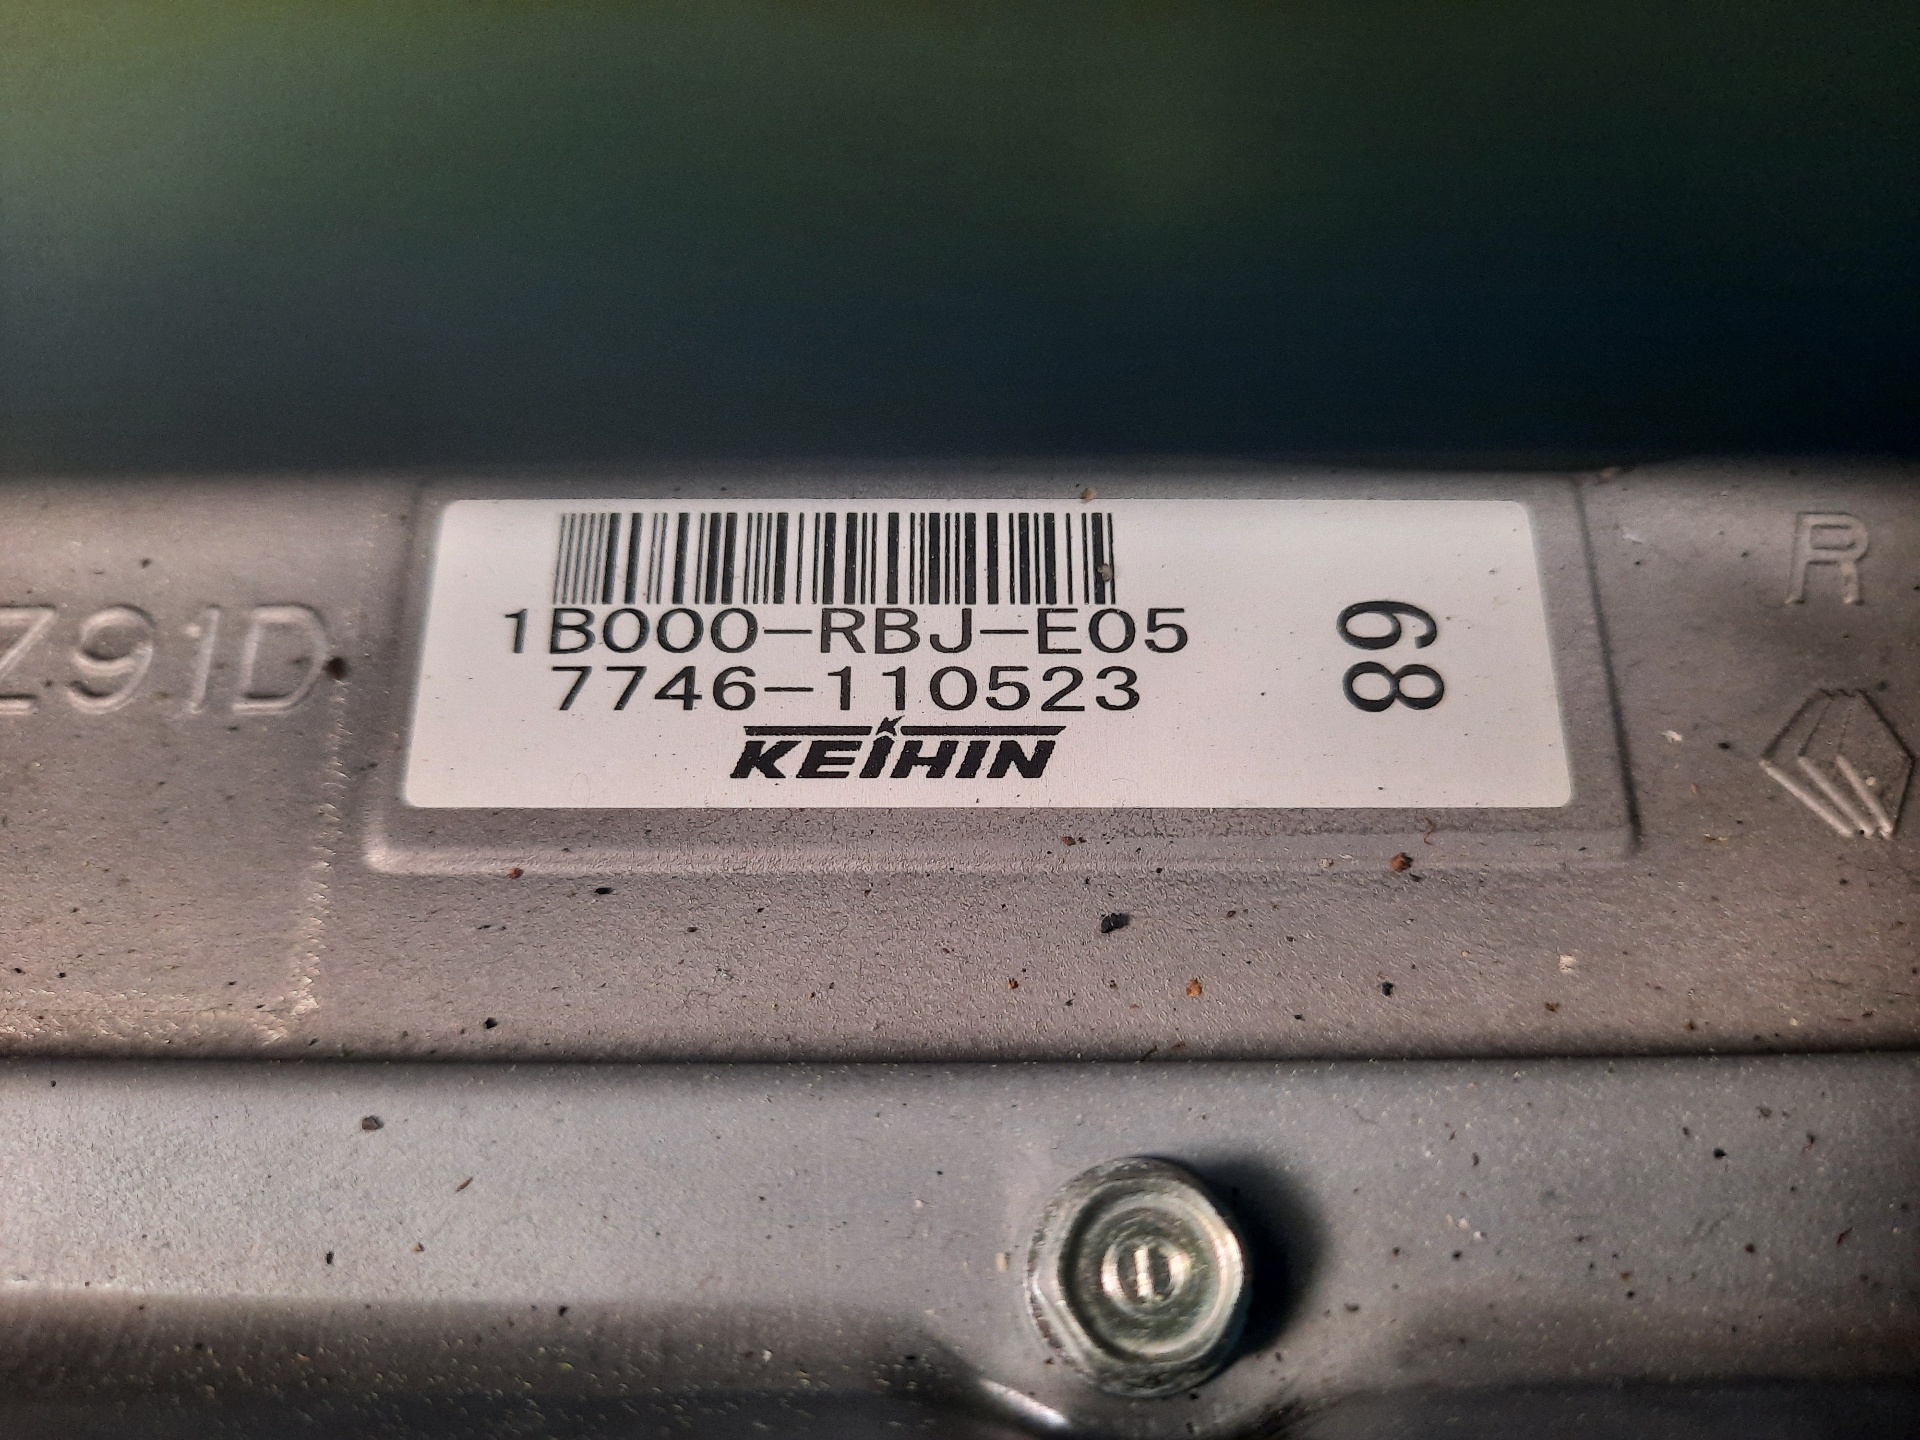 HONDA Insight 2 generation (2009-2015) Battery 1B000-RBJ-E05 24546497